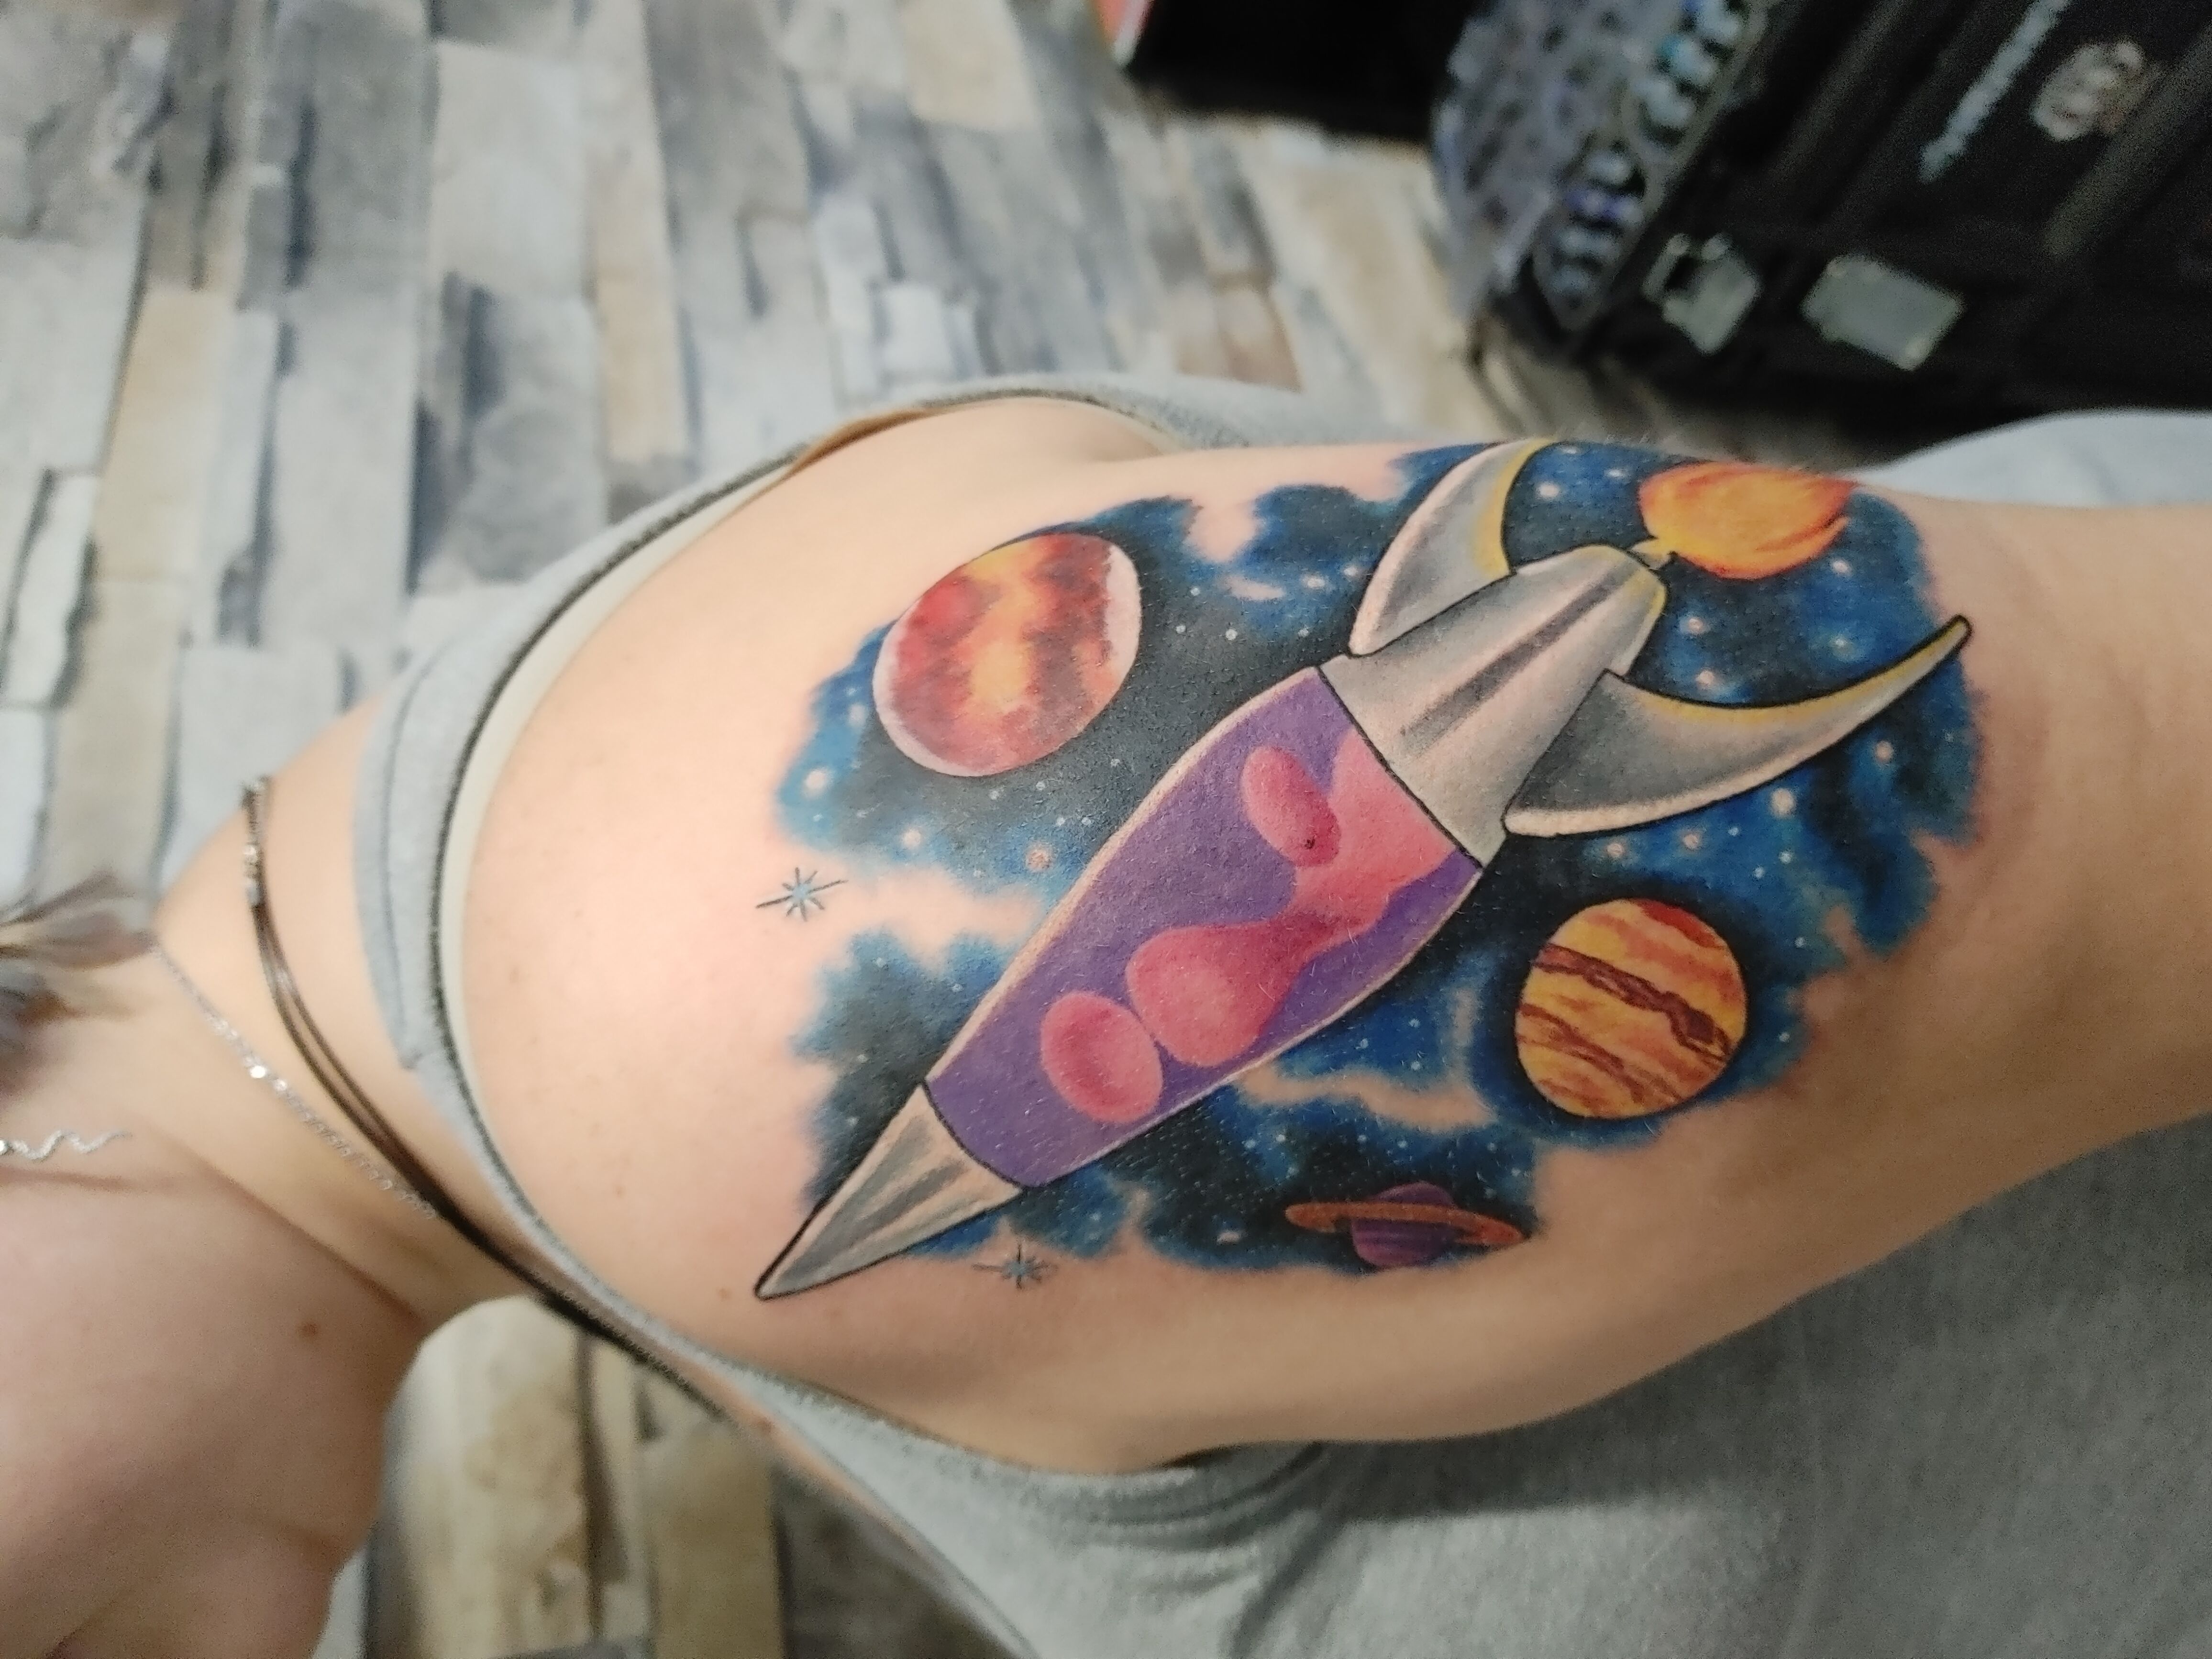 Tiny alien spaceship ankle tattoo - Tattoogrid.net